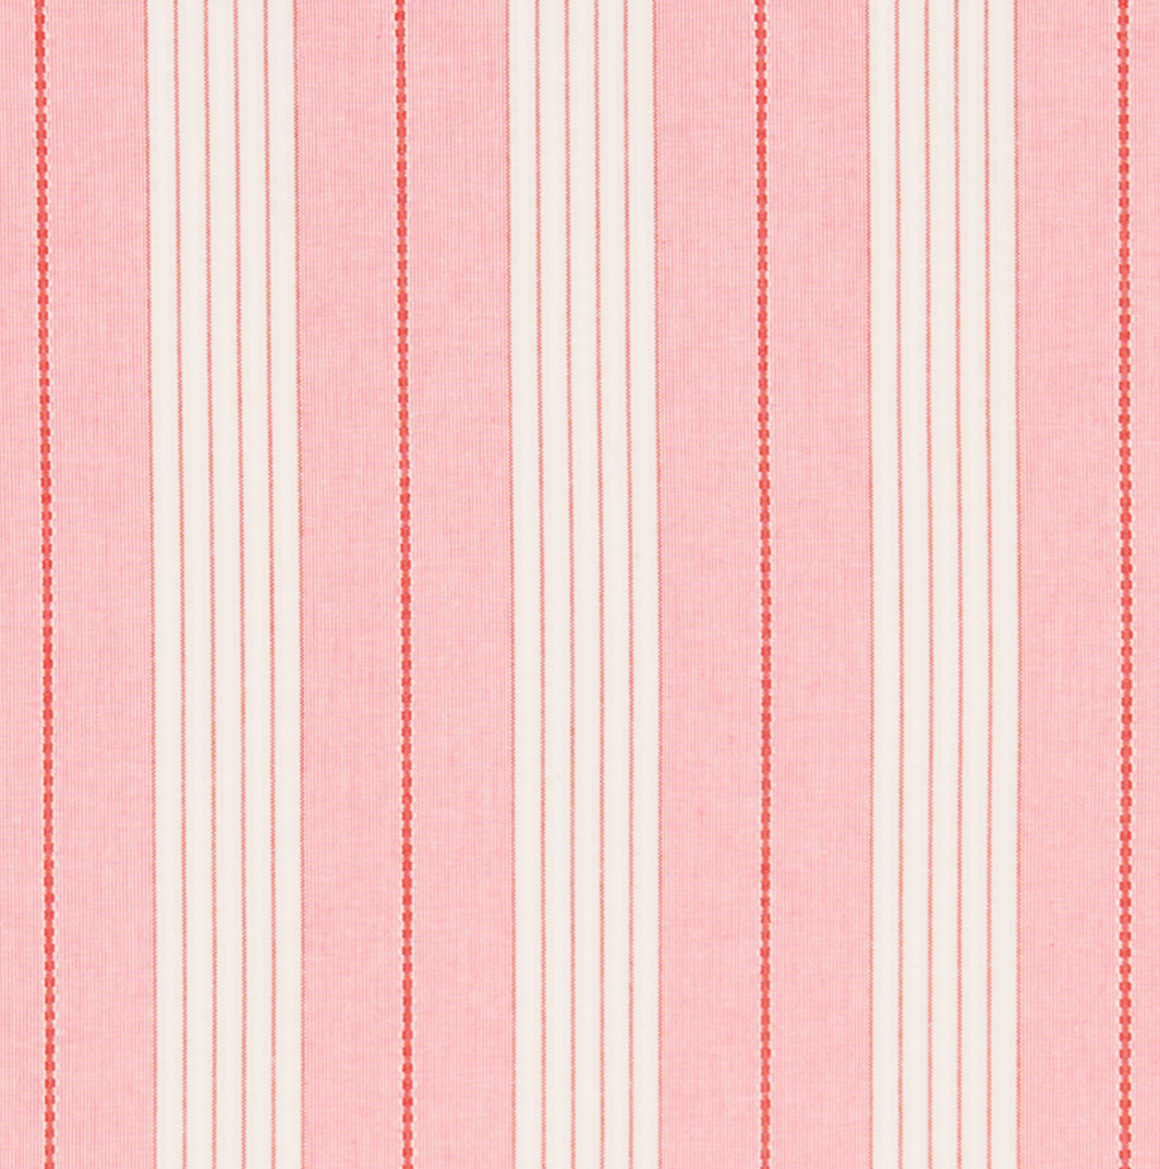 Audrey Stripe Fabric